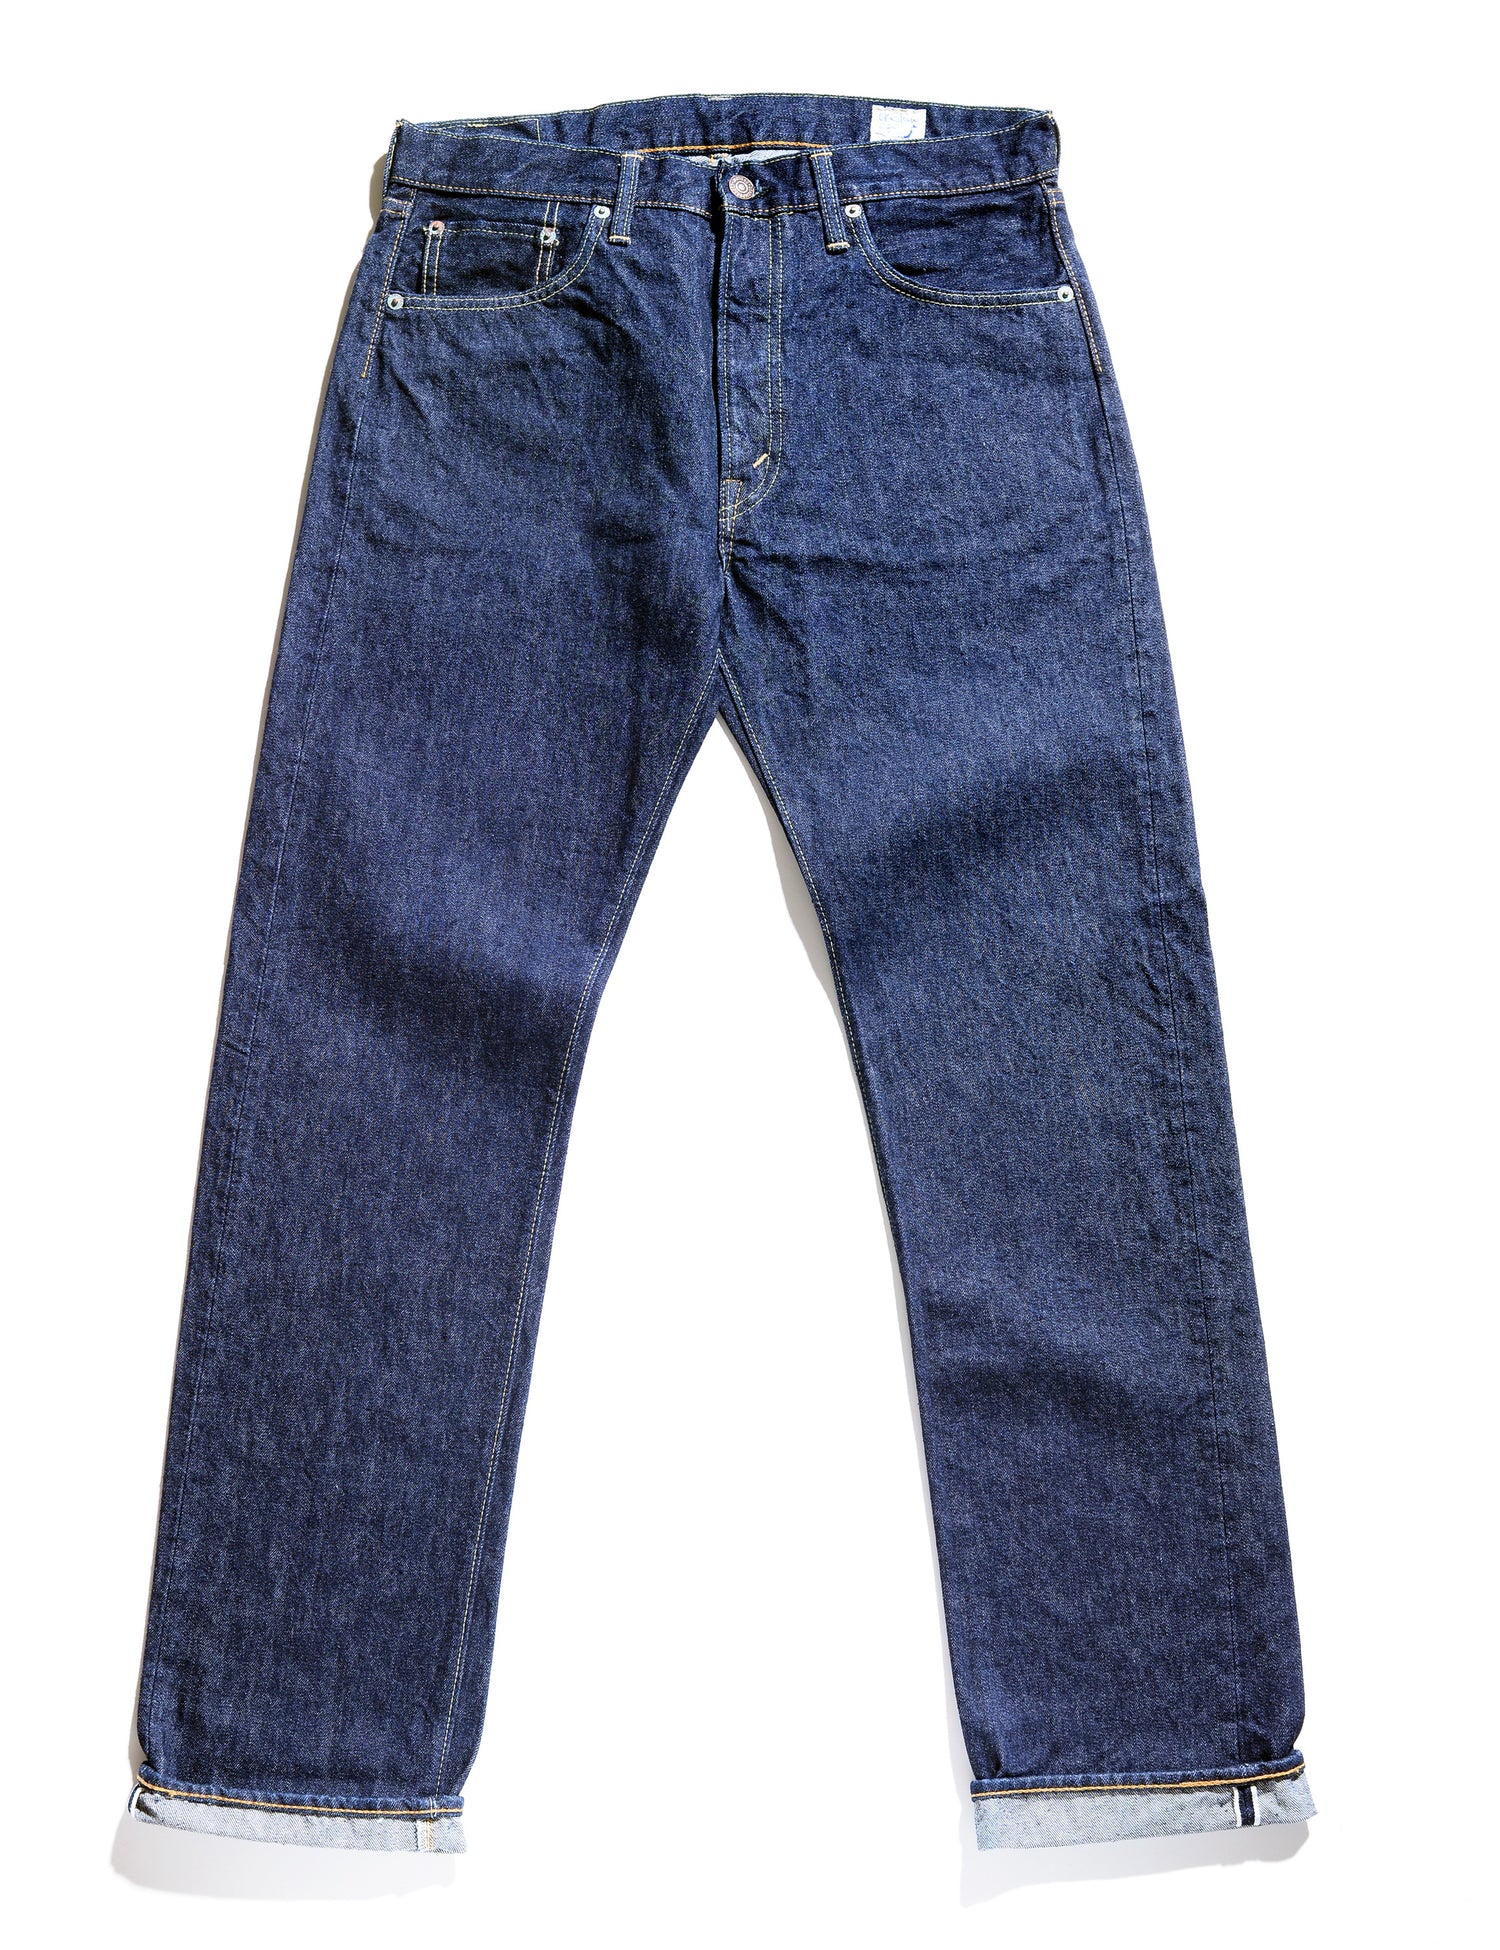 107 Slim Fit Selvedge Denim Jeans - One Wash